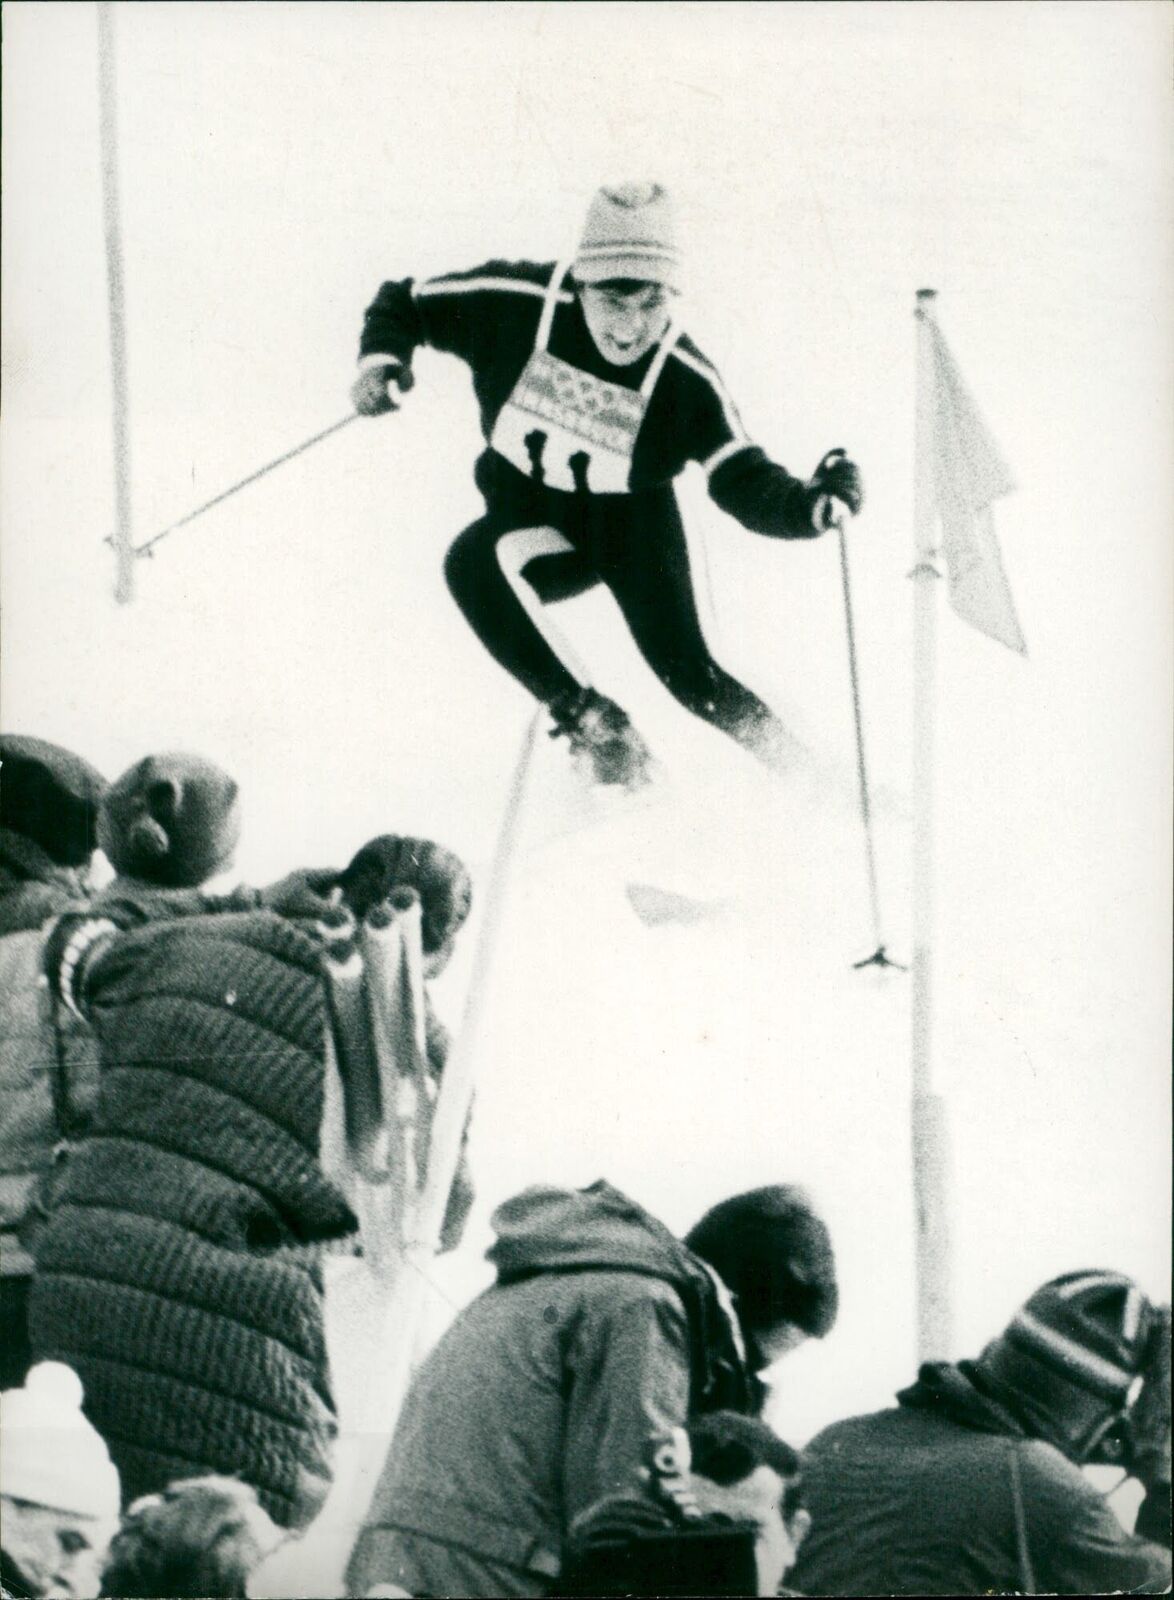 1968 Winter Olympics - Vintage Photograph 3772812